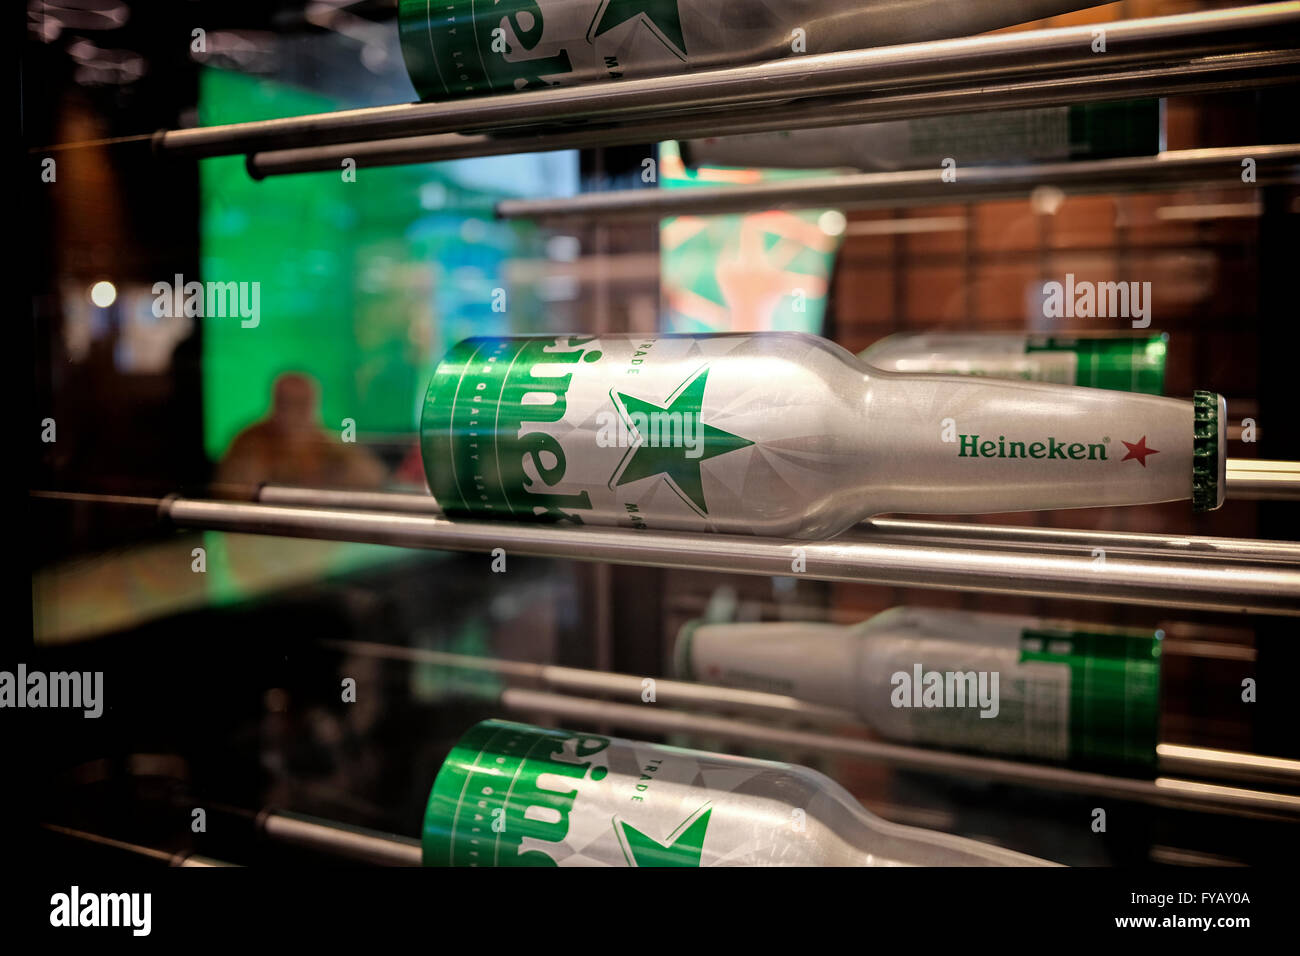 Bottles of Heineken Lager Beer in a bar in Schiphol airport in Amsterdam Netherlands Stock Photo